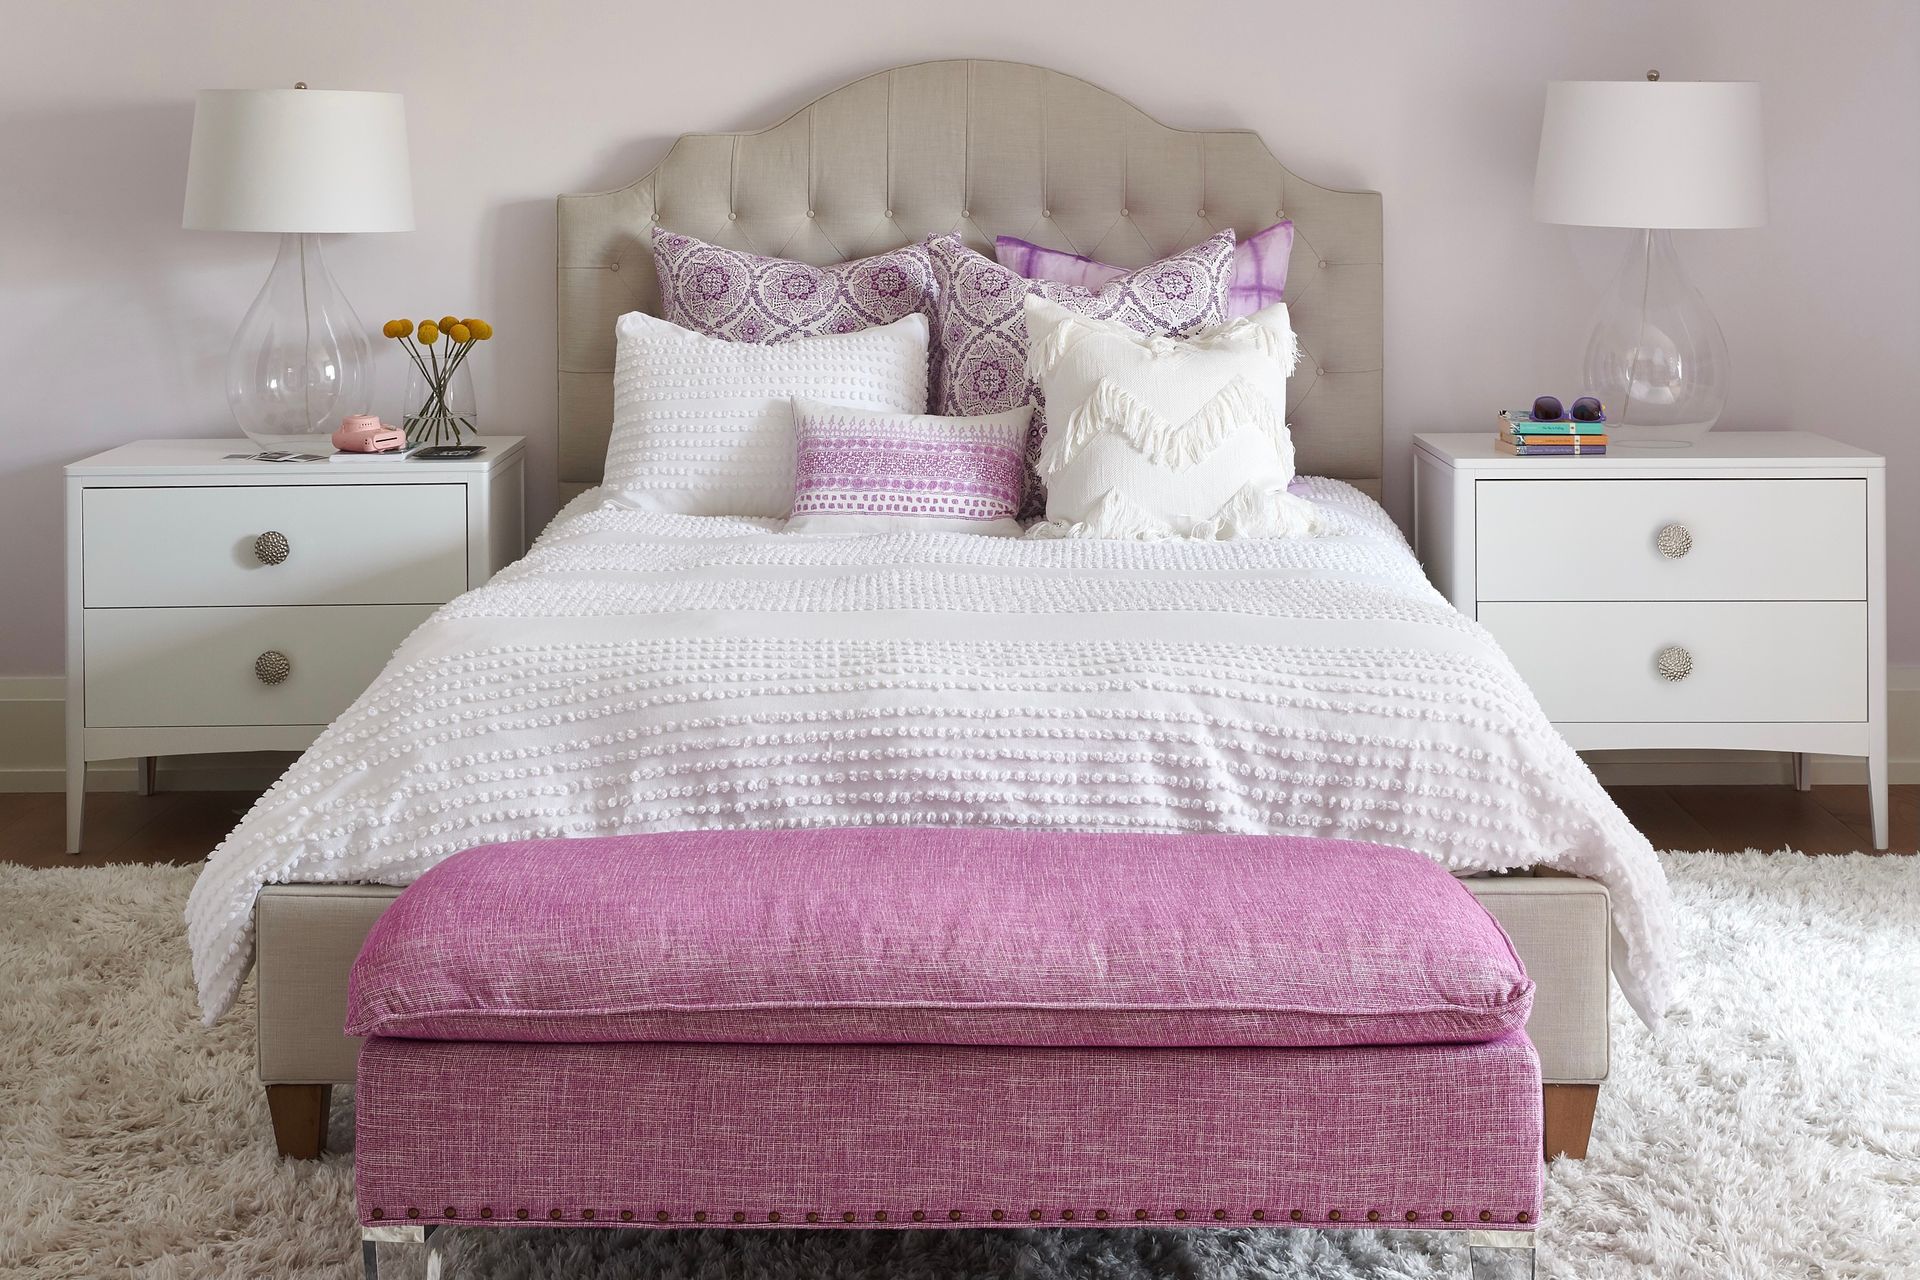 bedroom with purple decor 